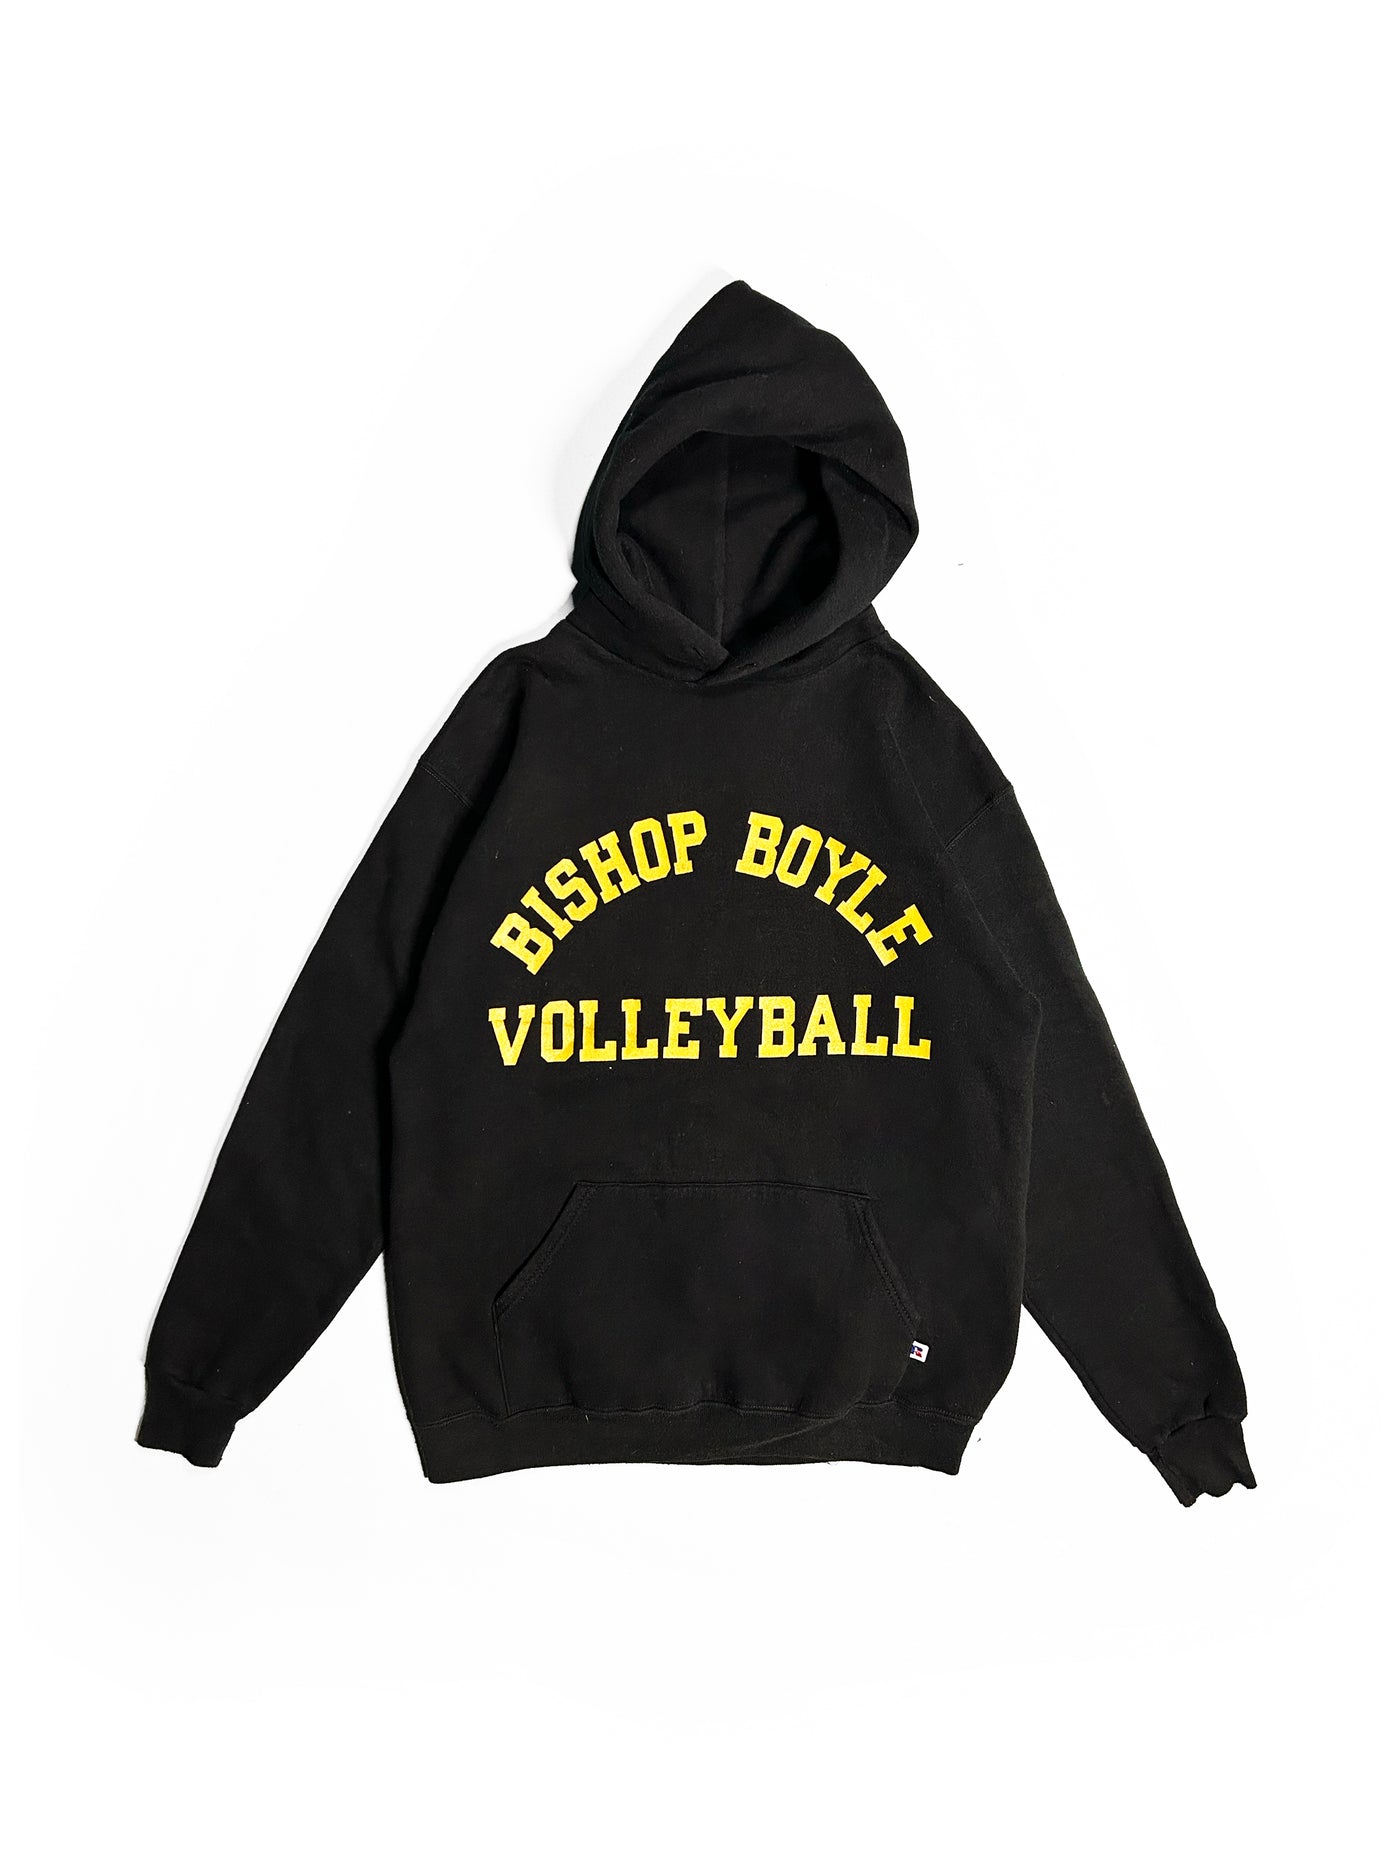 Vintage 80s Bishop Boyle Volleyball Russell Athletic Hoodie